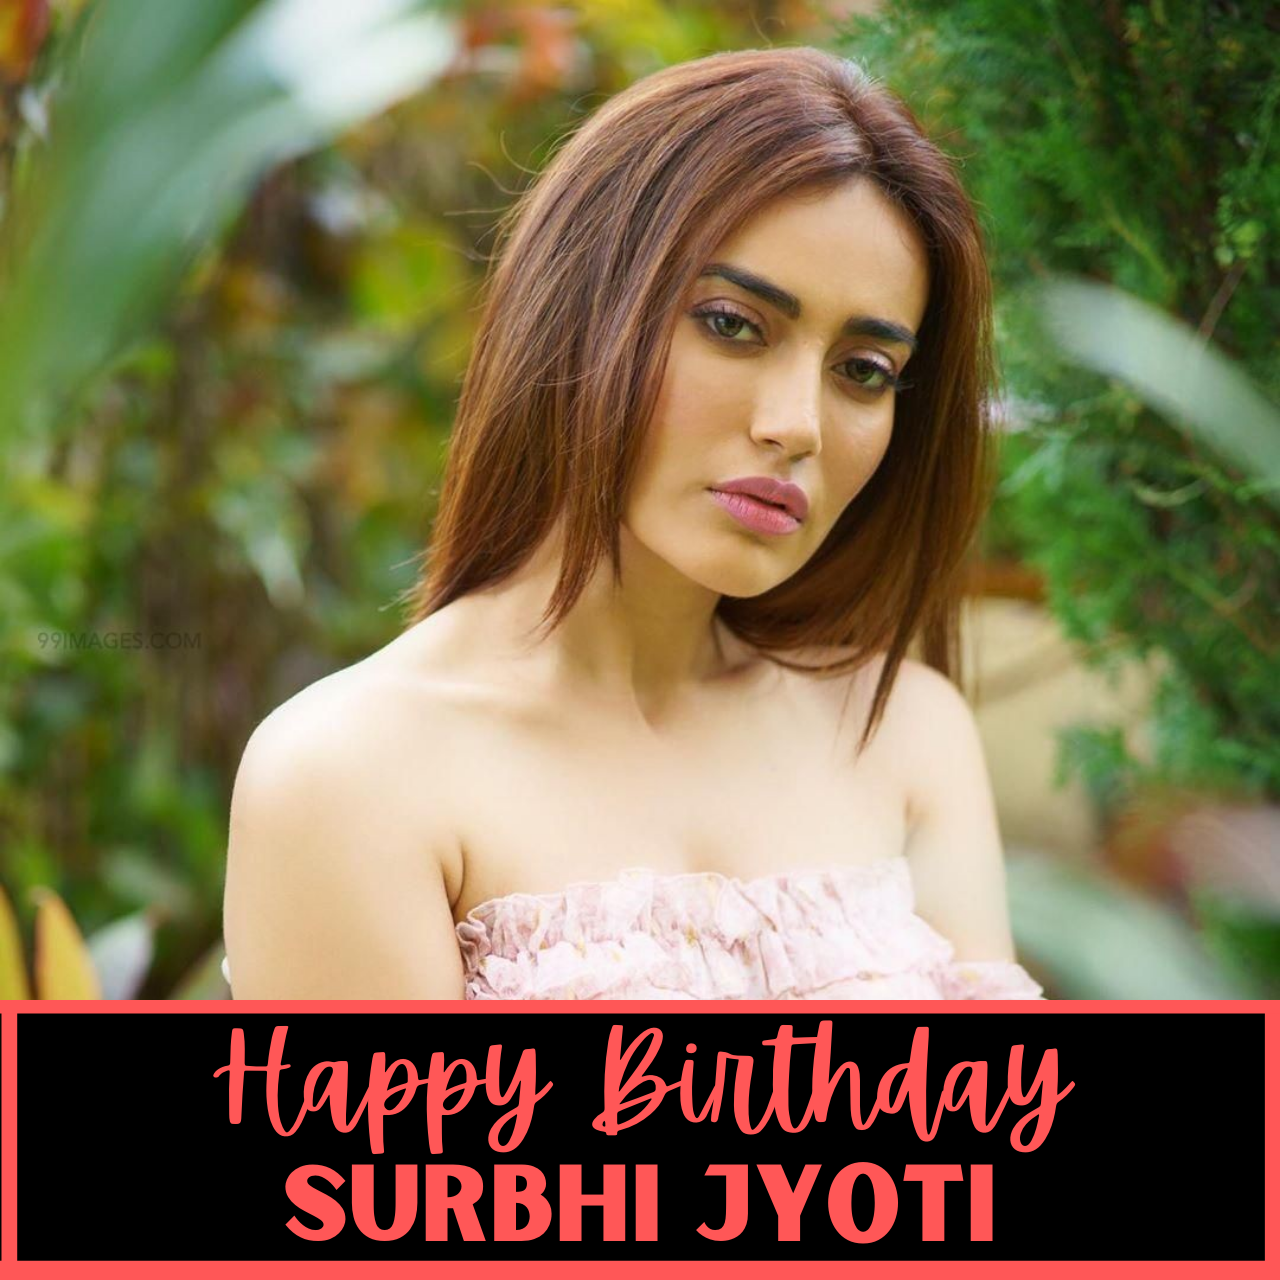 Happy Birthday Surbhi Jyoti: Pic (photos), Wishes, and WhatsApp Status Video